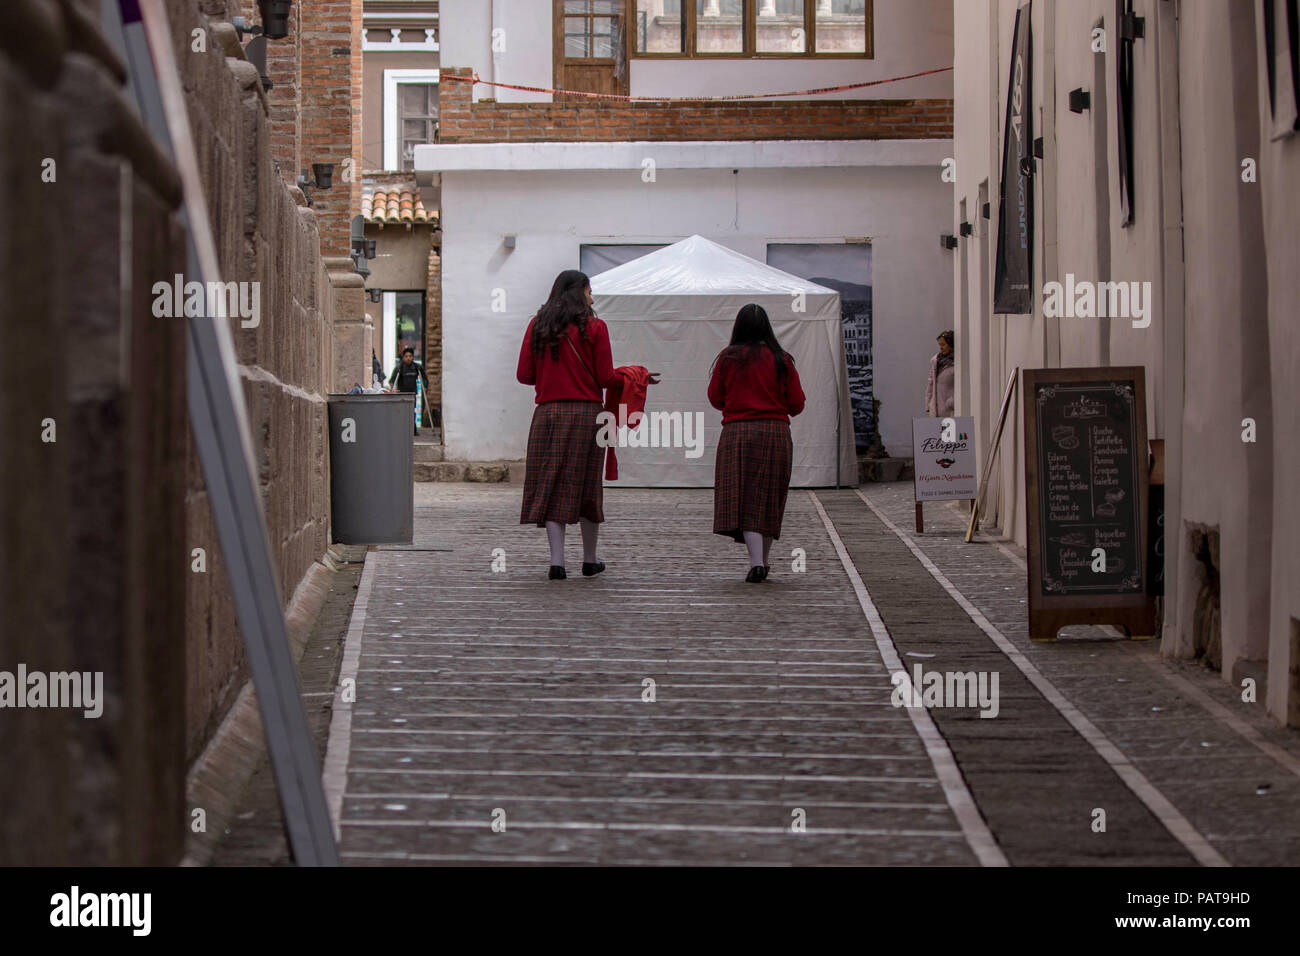 Two Catholic school girls in uniform walking in an alley in Ecuador Stock Photo